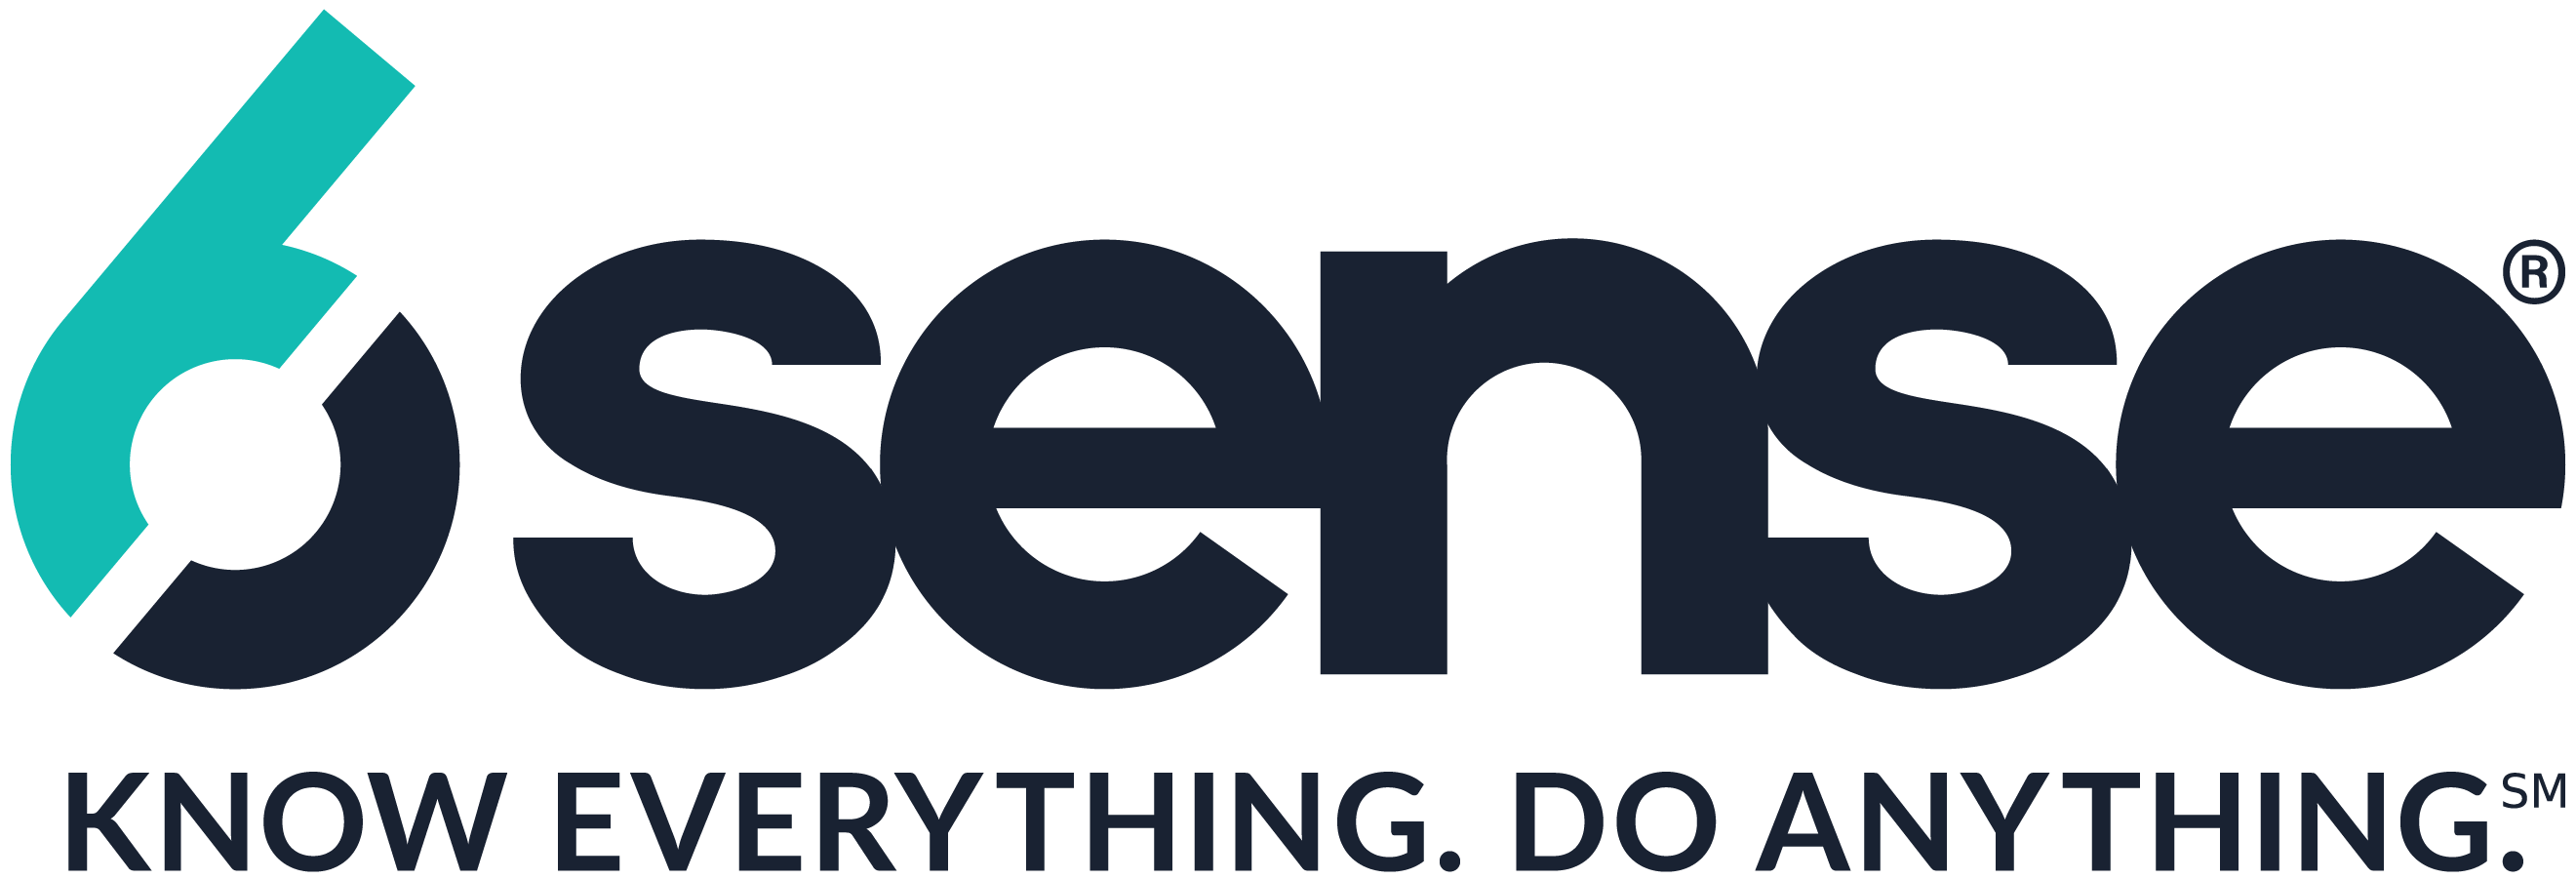 Vision Fund investment portfolio company 6sense's logo